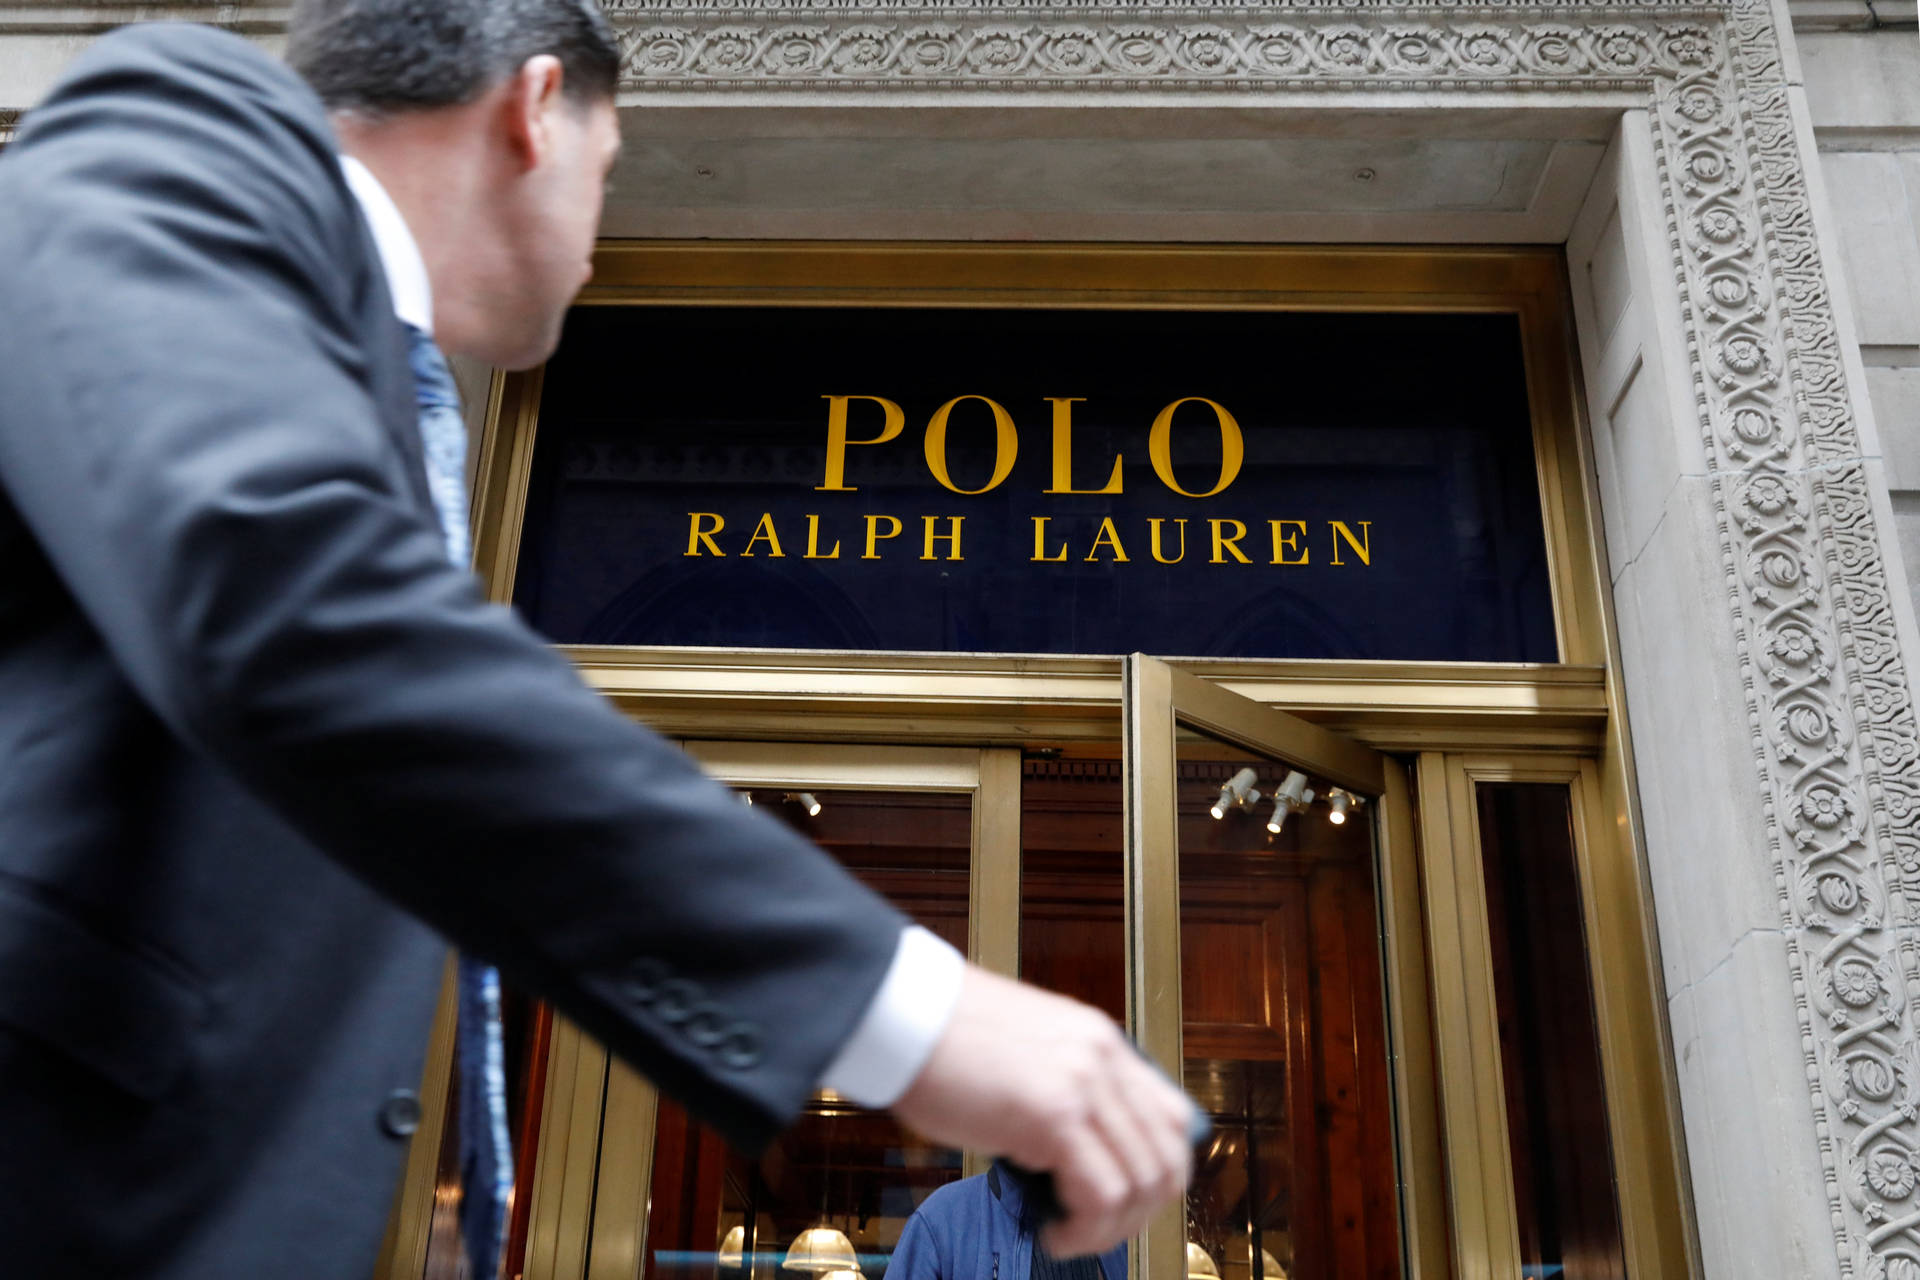 Polo Ralph Lauren Entrance Background